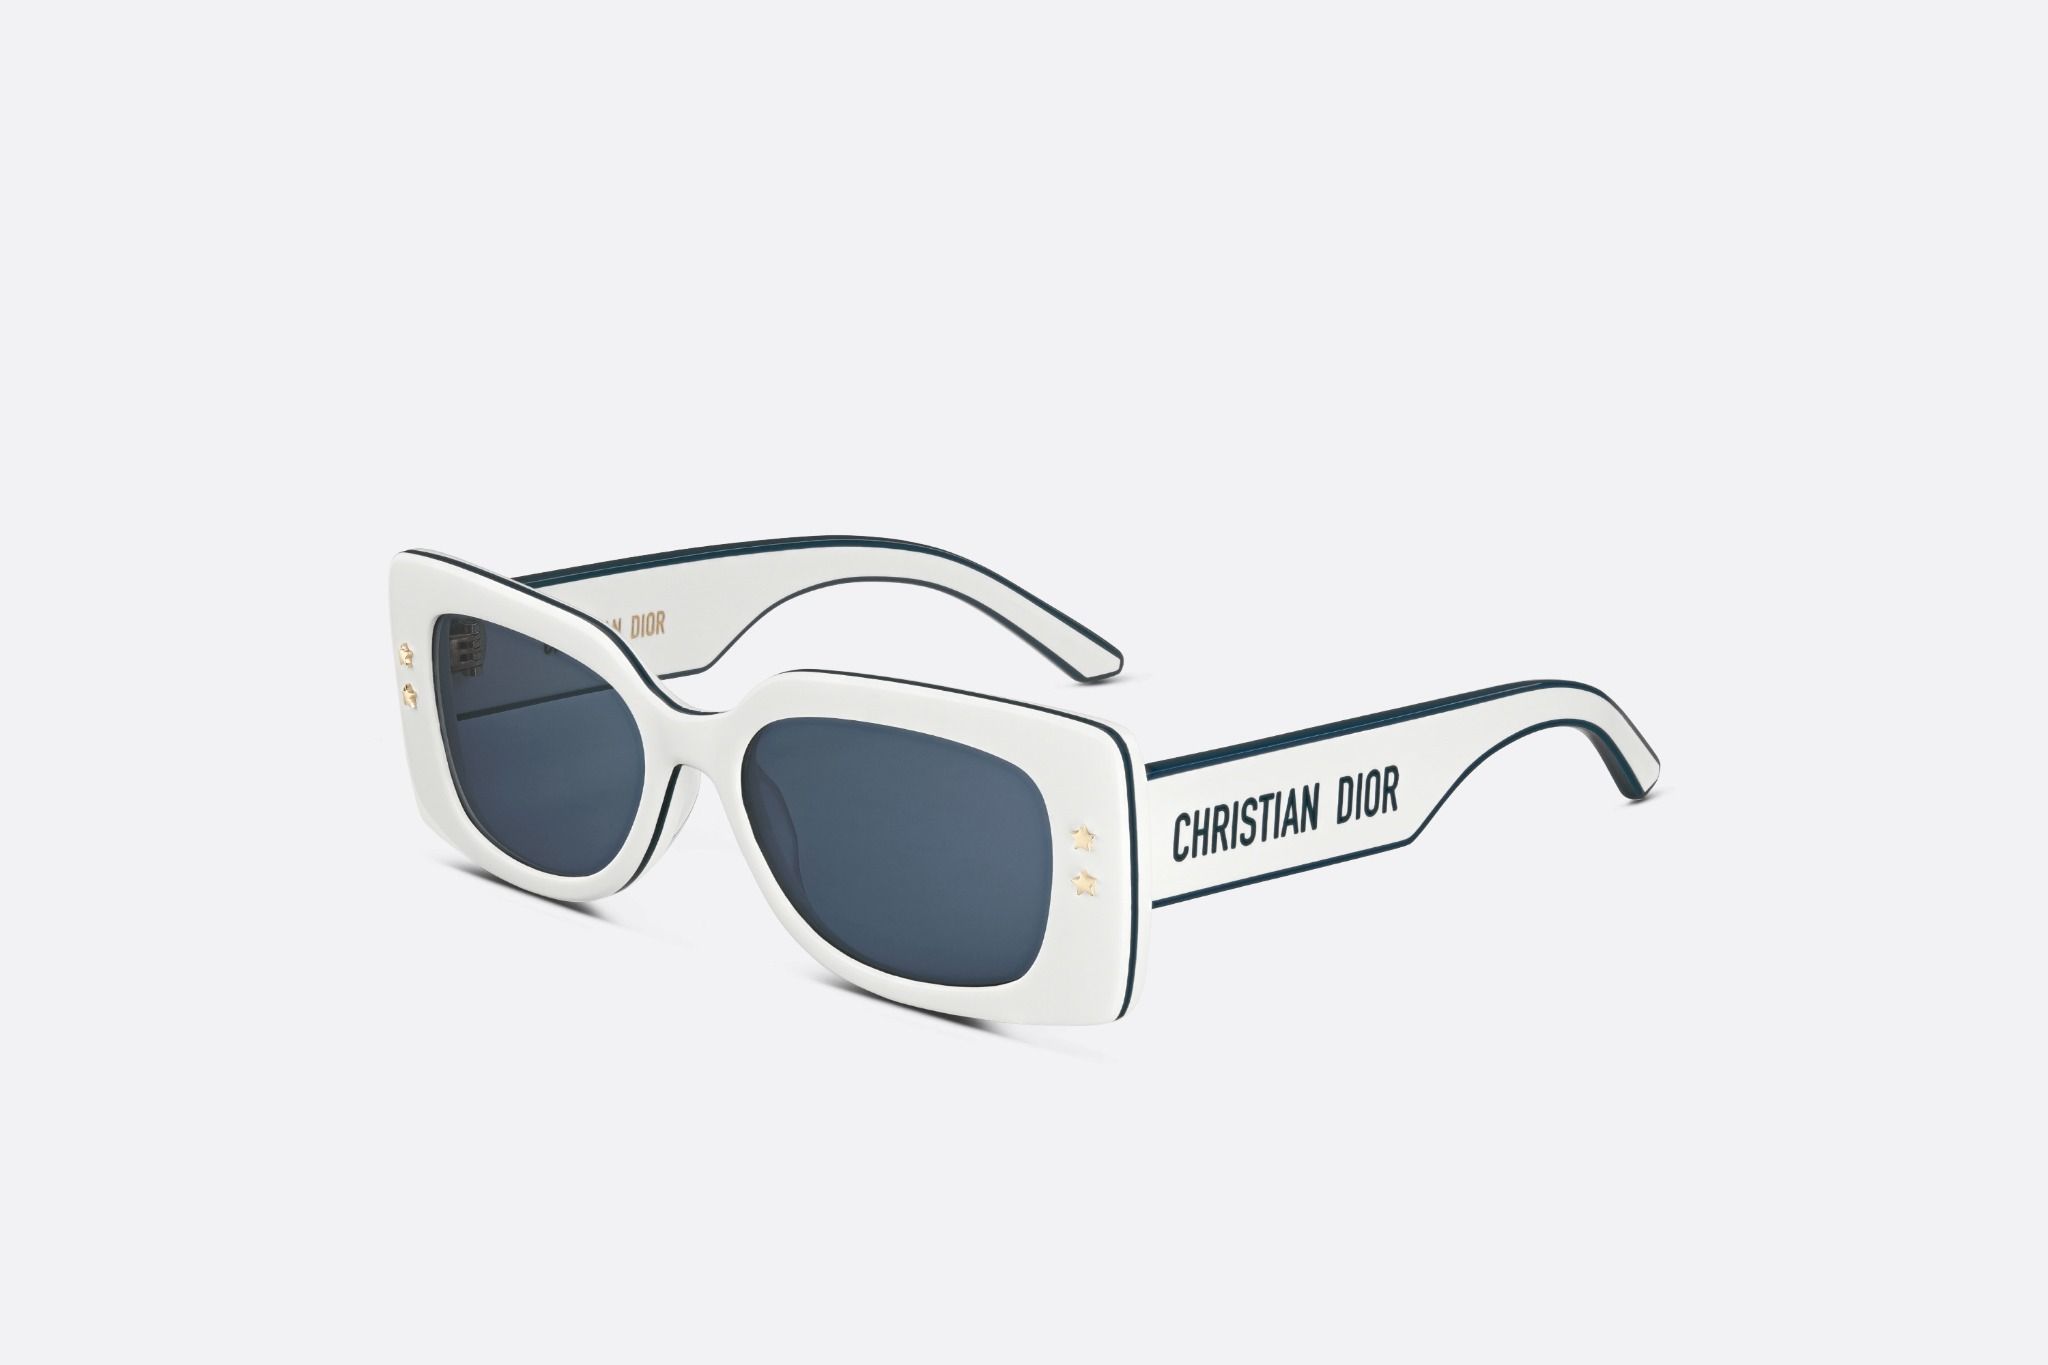 Diorstellaire1 Square Sunglasses Flash Sales 56 OFF  wwwfriarymillcouk